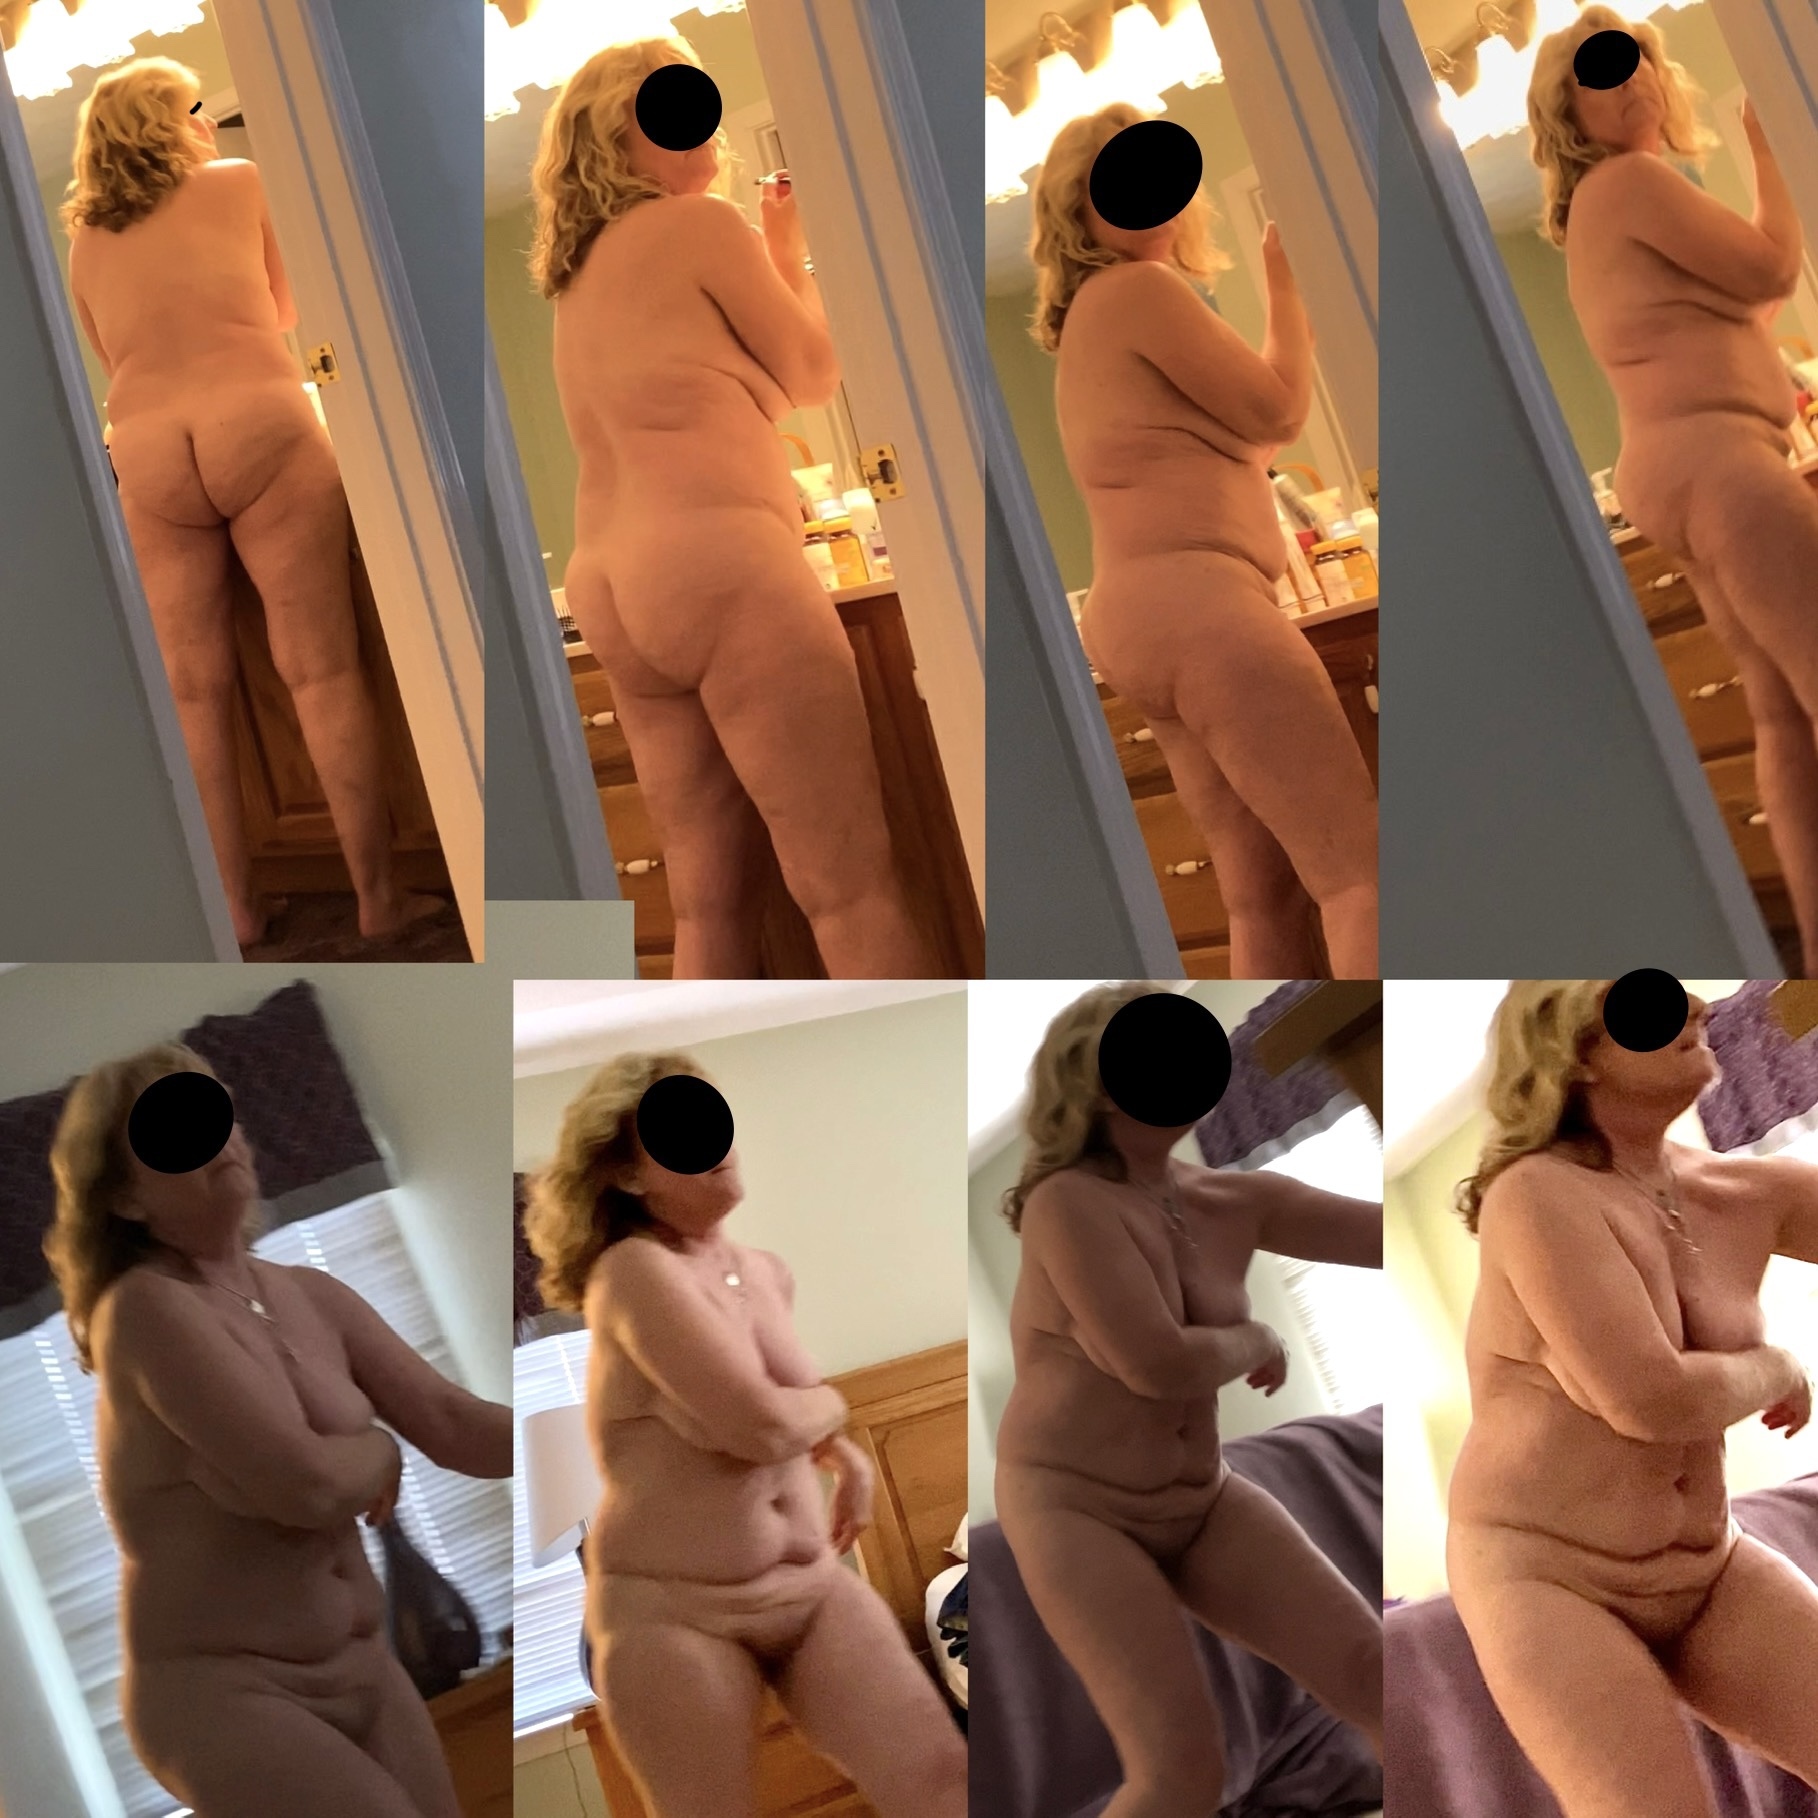 cassandra mcallister recommends caught naked voyeur pic